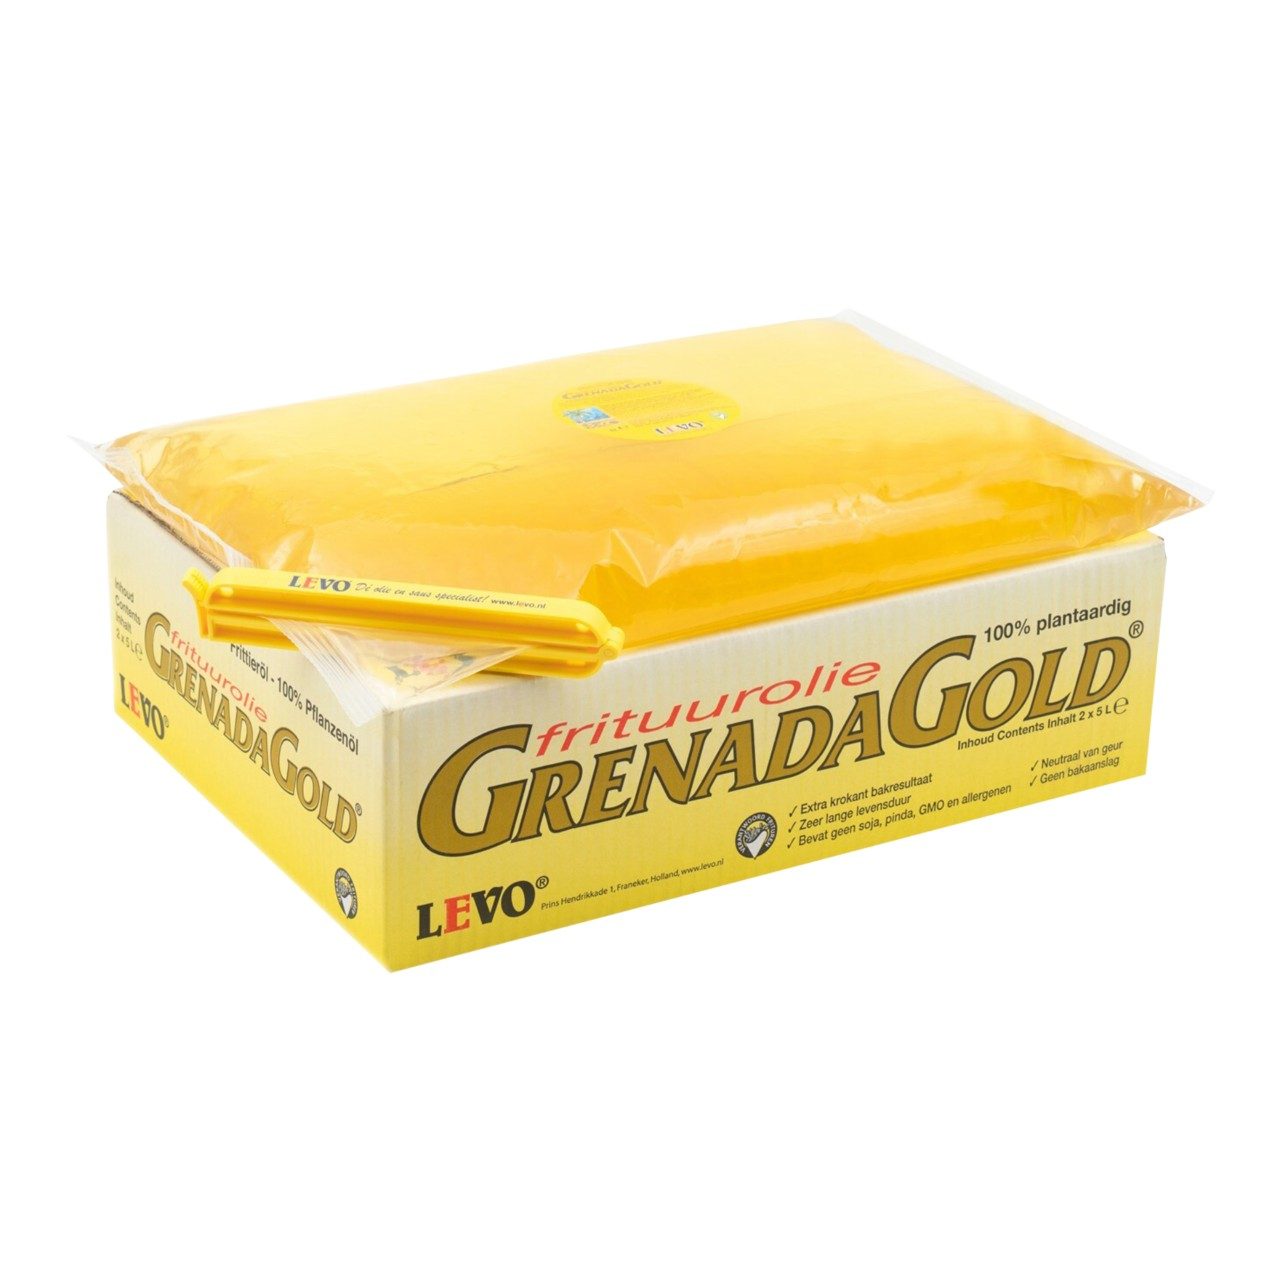 Frituurolie grenada gold